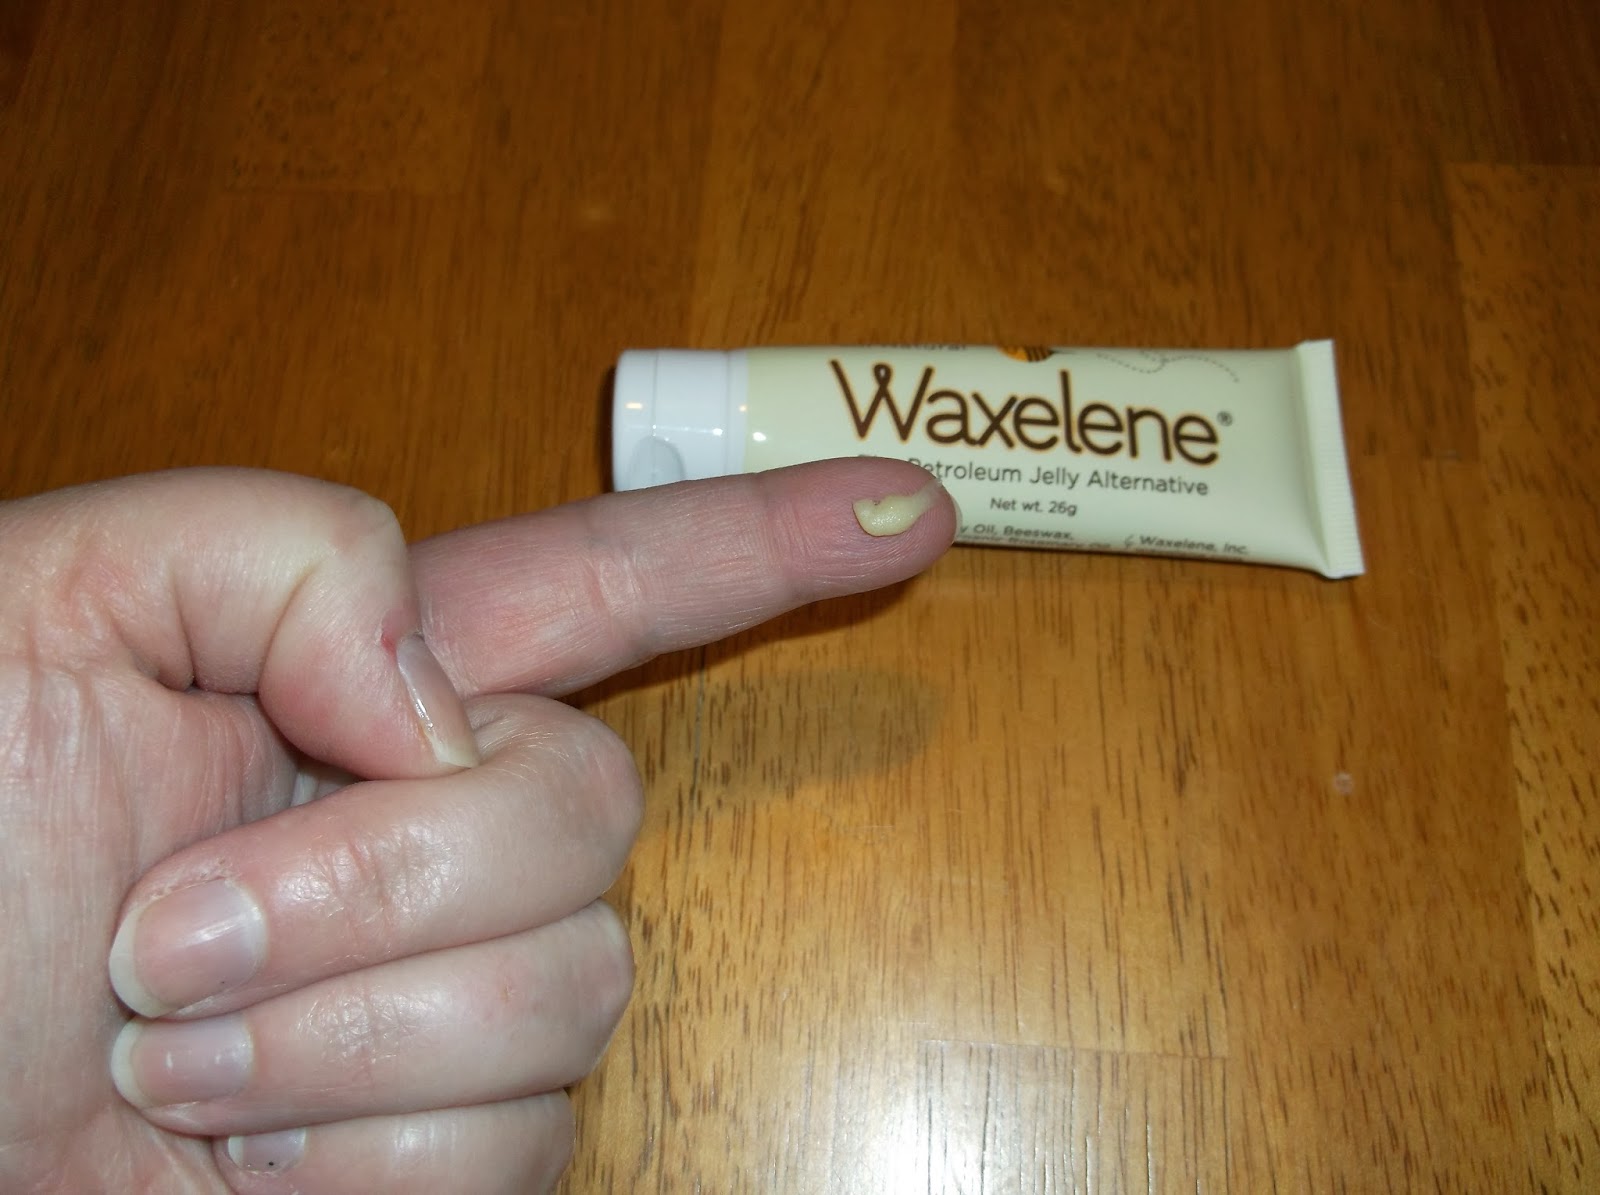 Buy Waxelene, The Petroleum Jelly Alternative by Waxelene, Inc. on